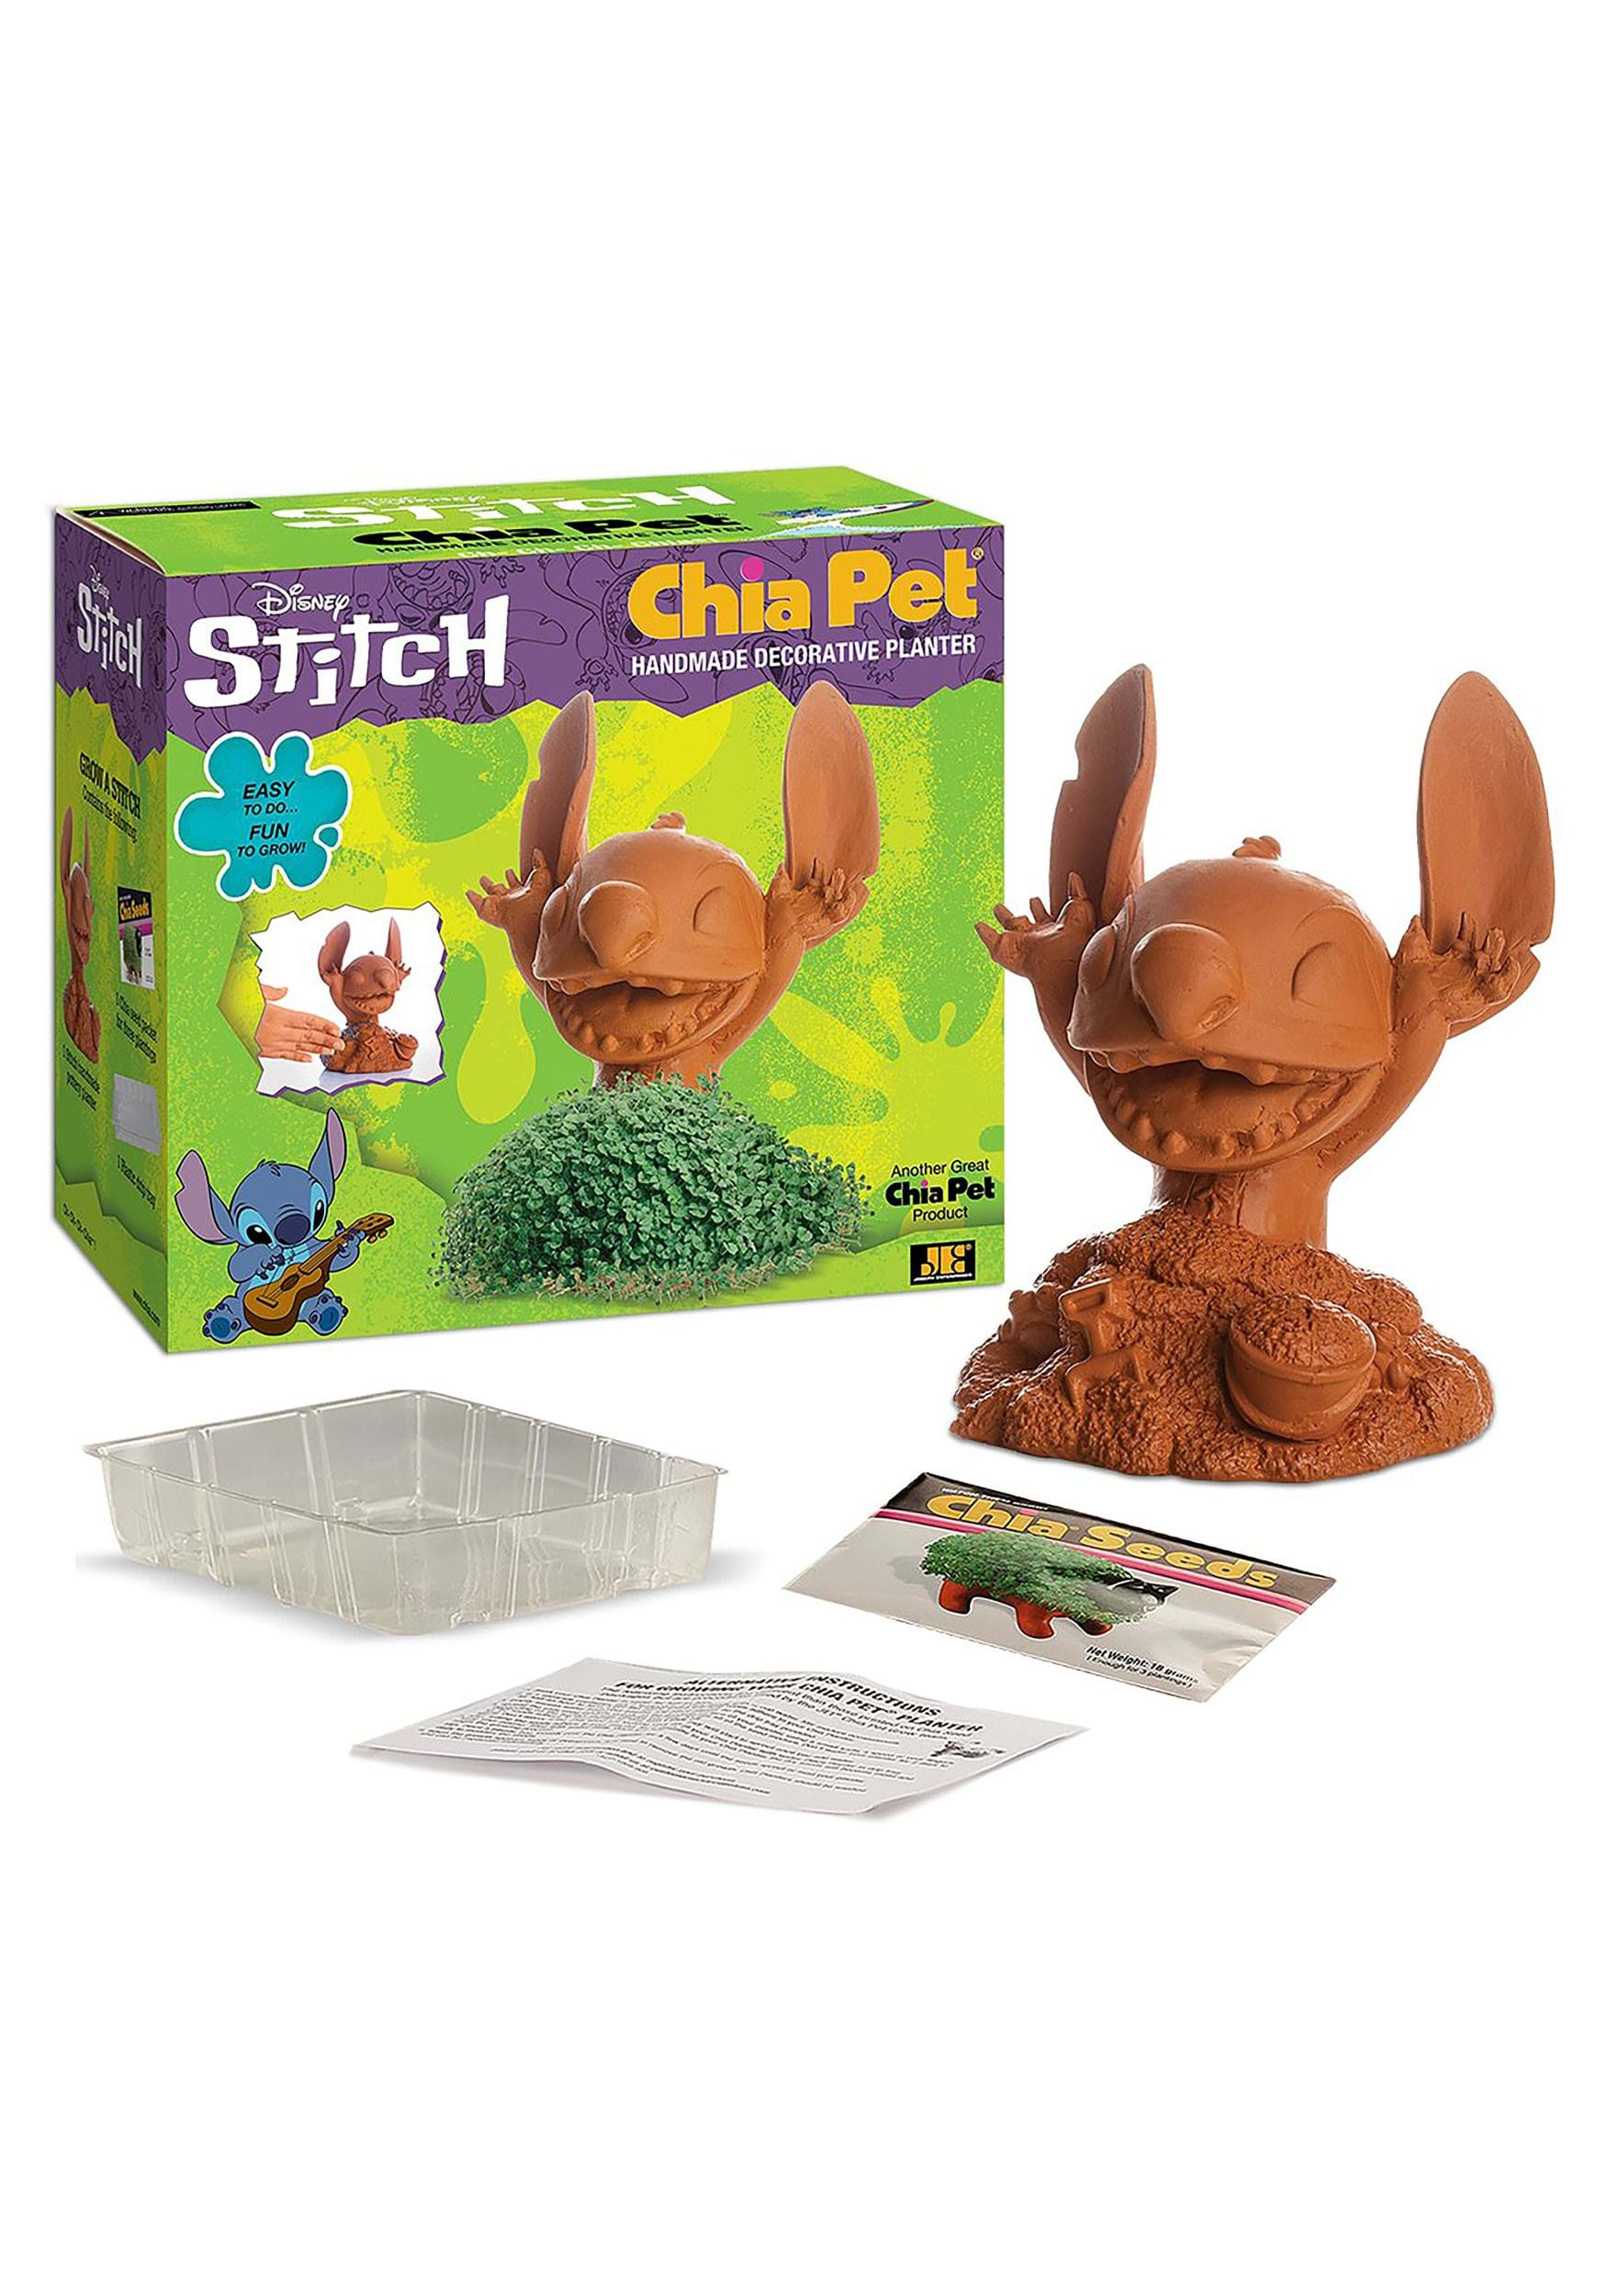 Chia Stitch Pet